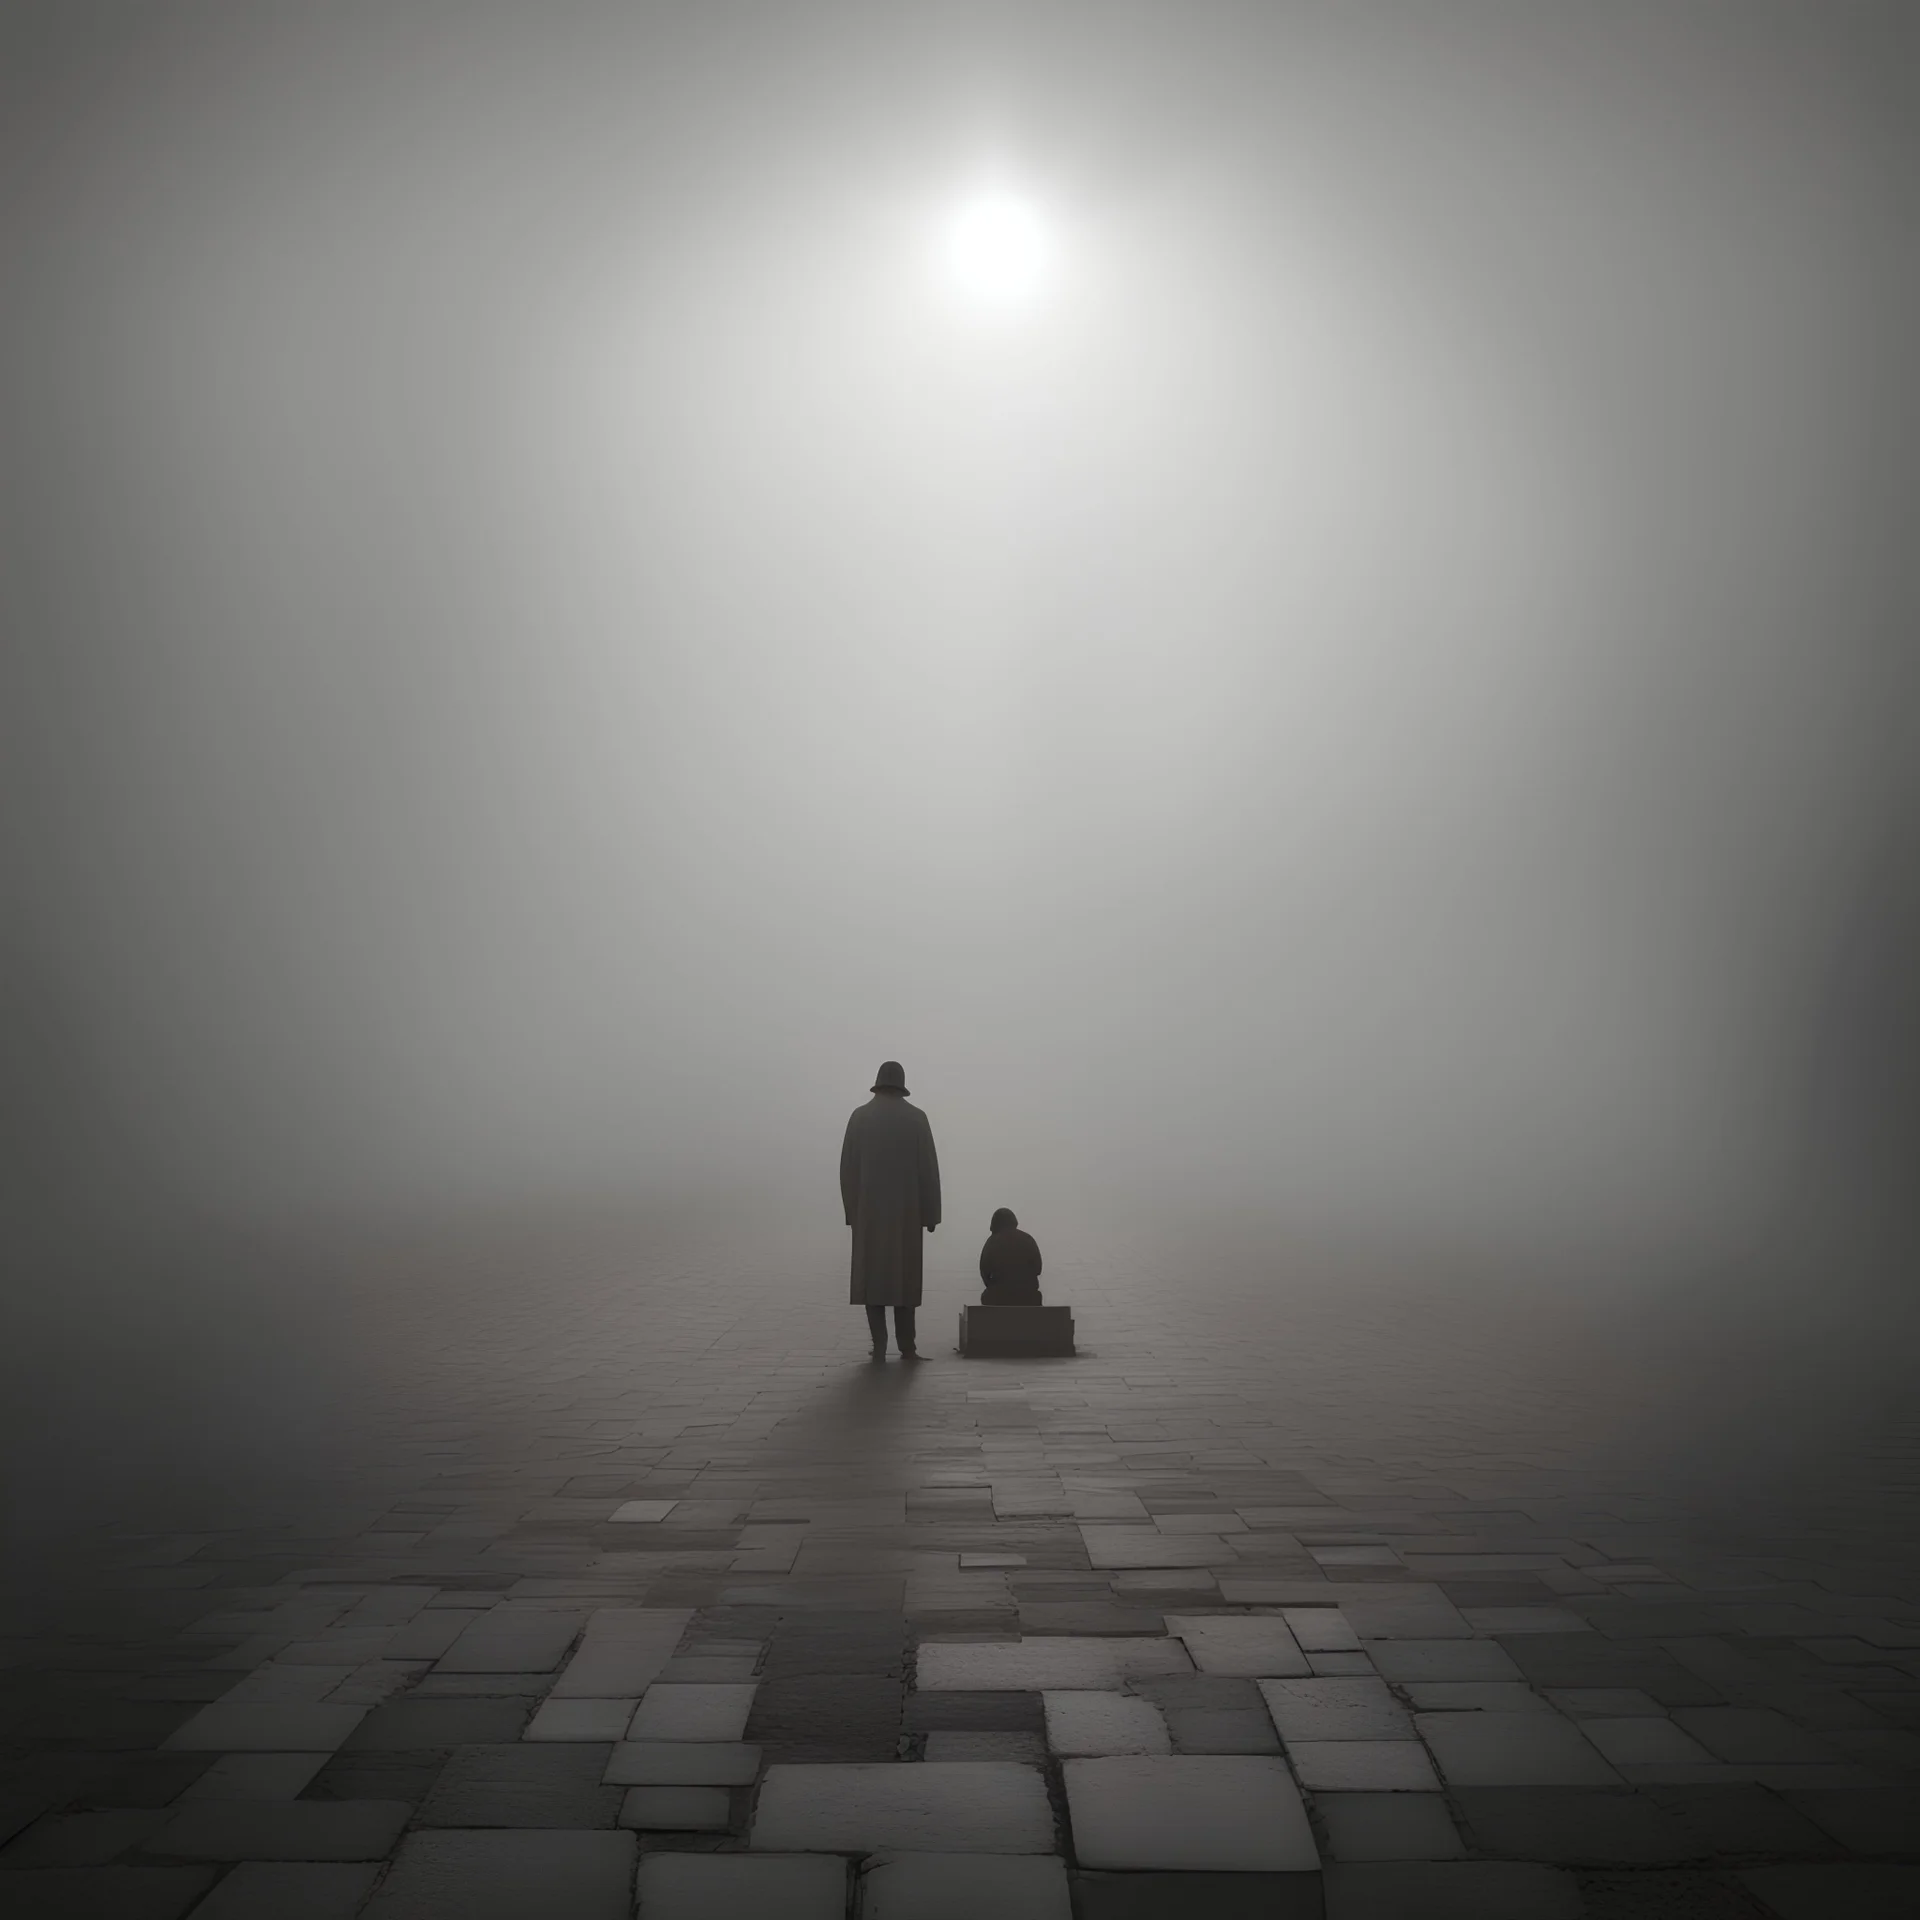 нищая,молится,площадь,туман,яркий свет